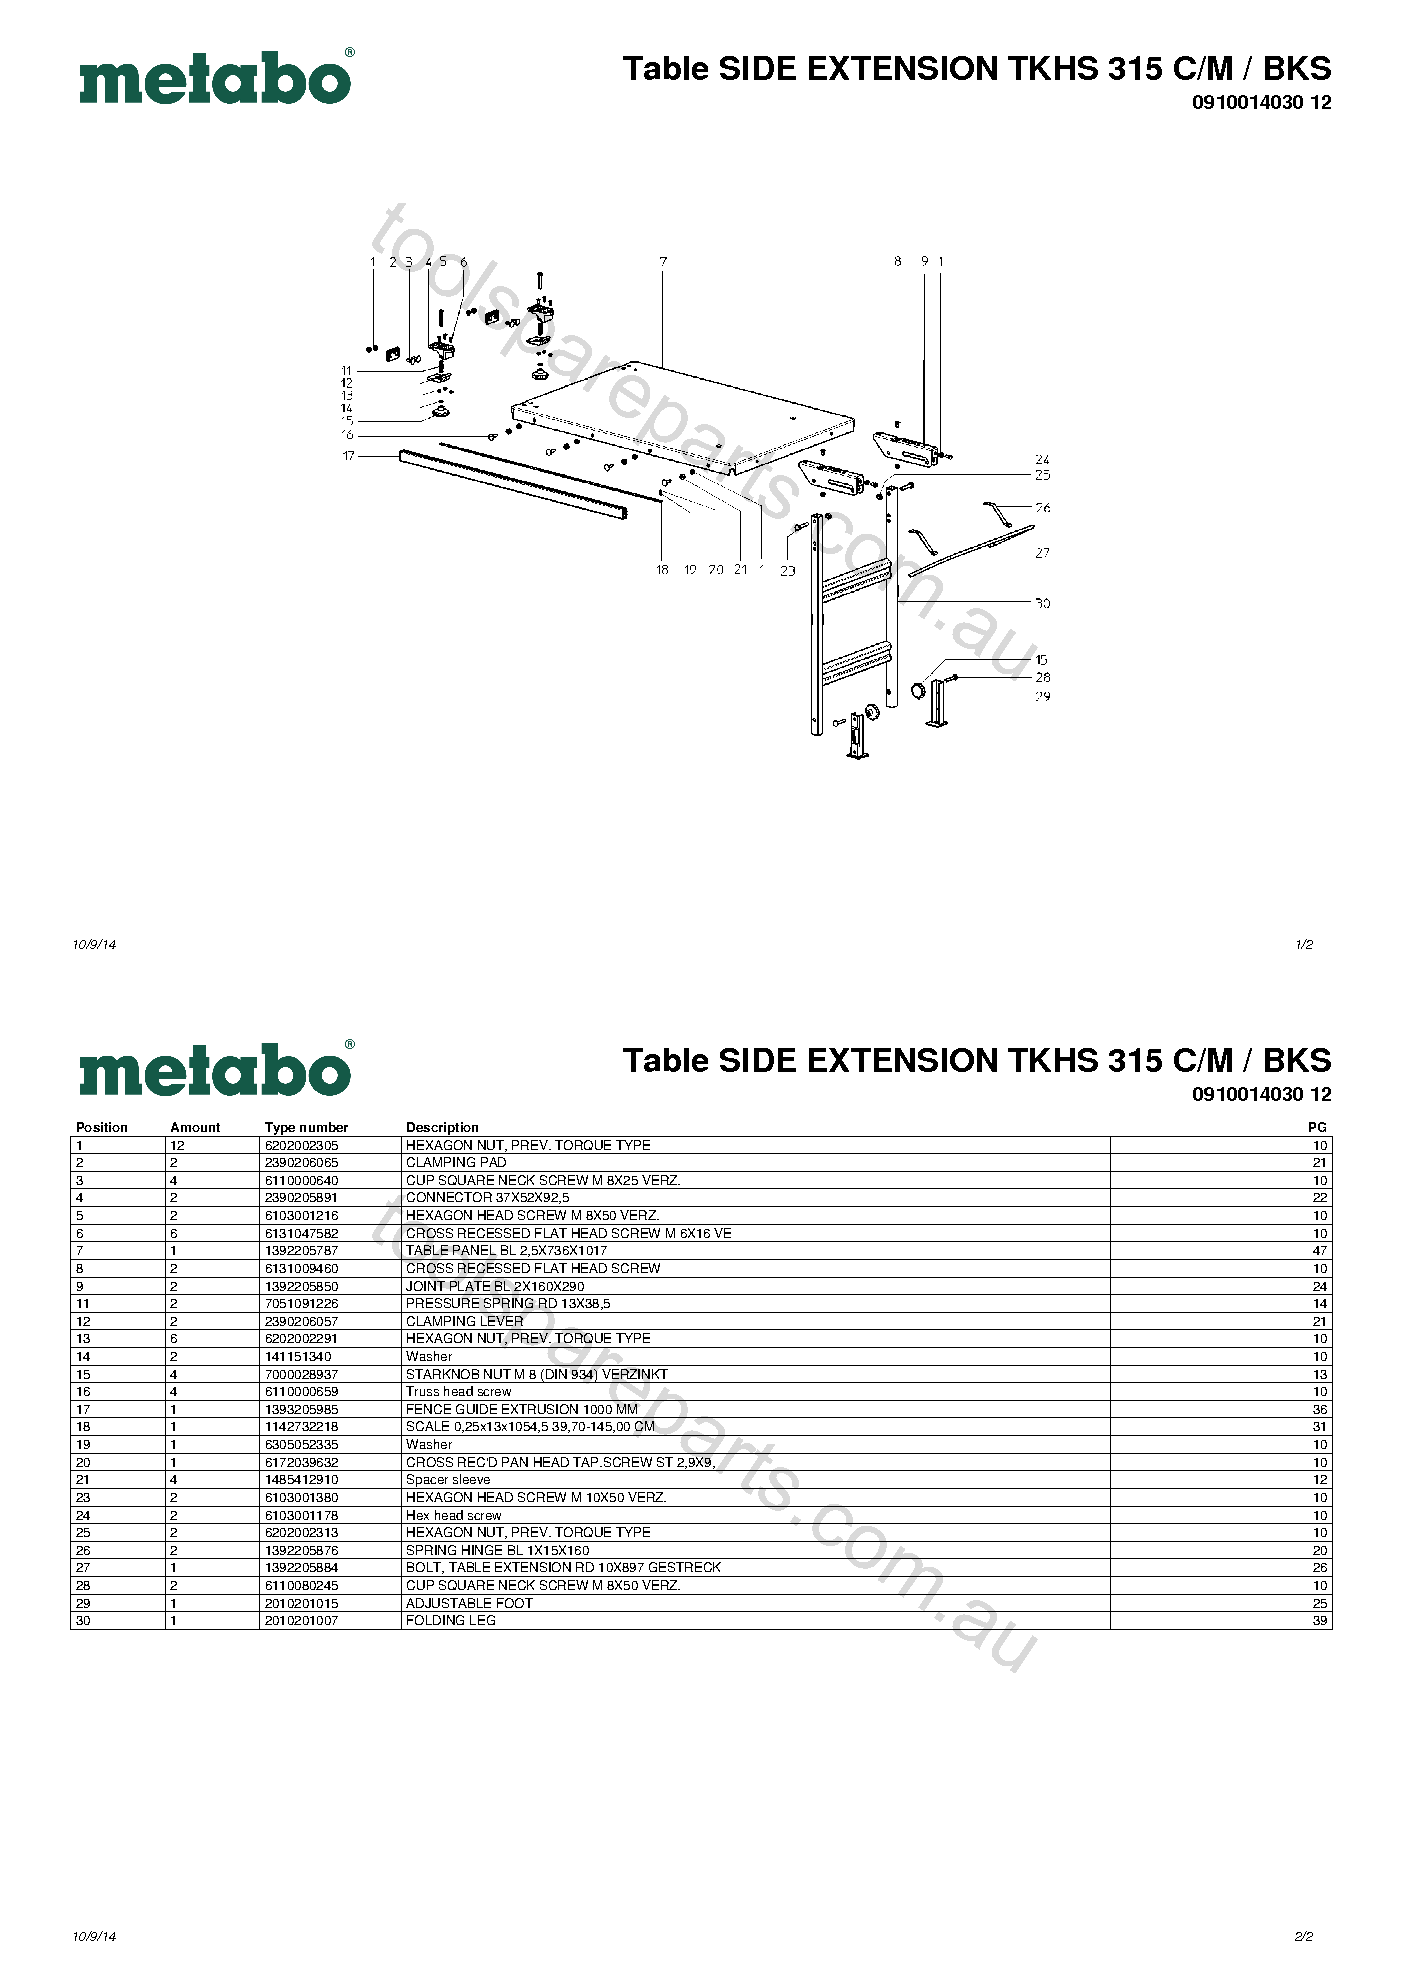 Metabo Table SIDE EXTENSION TKHS 315 C/M / BKS 0910014030 12  Diagram 1